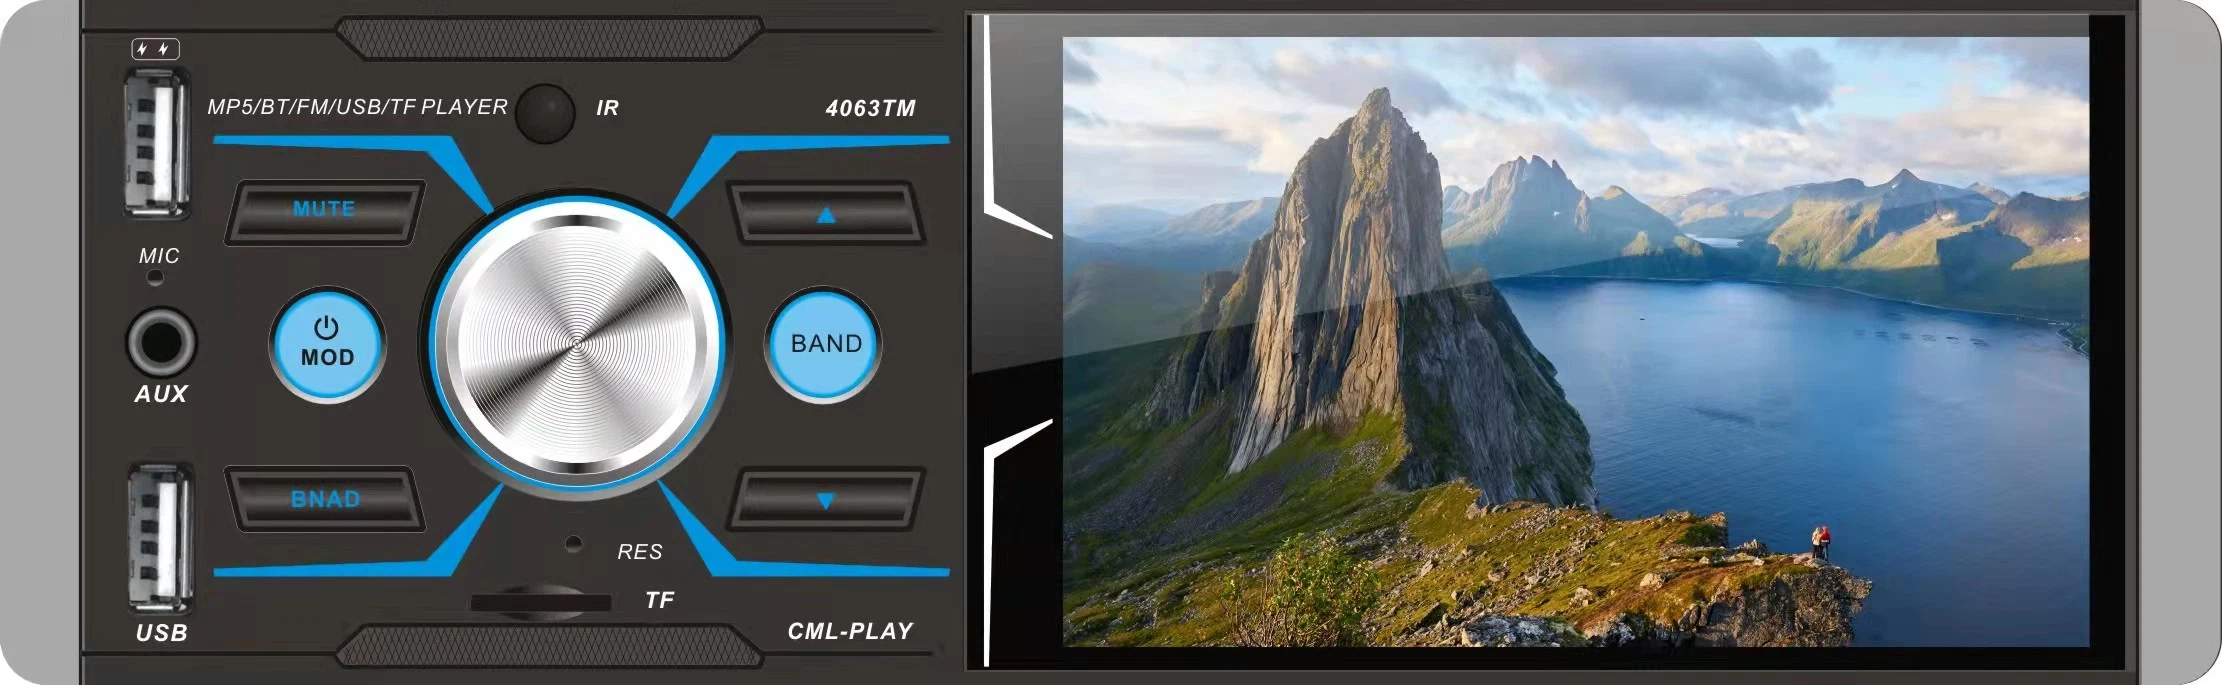 HD 4 pulgadas de pantalla táctil del sistema Android Coches 1 DIN Radio reproductor de DVD reproductor multimedia, navegación GPS de coche universal